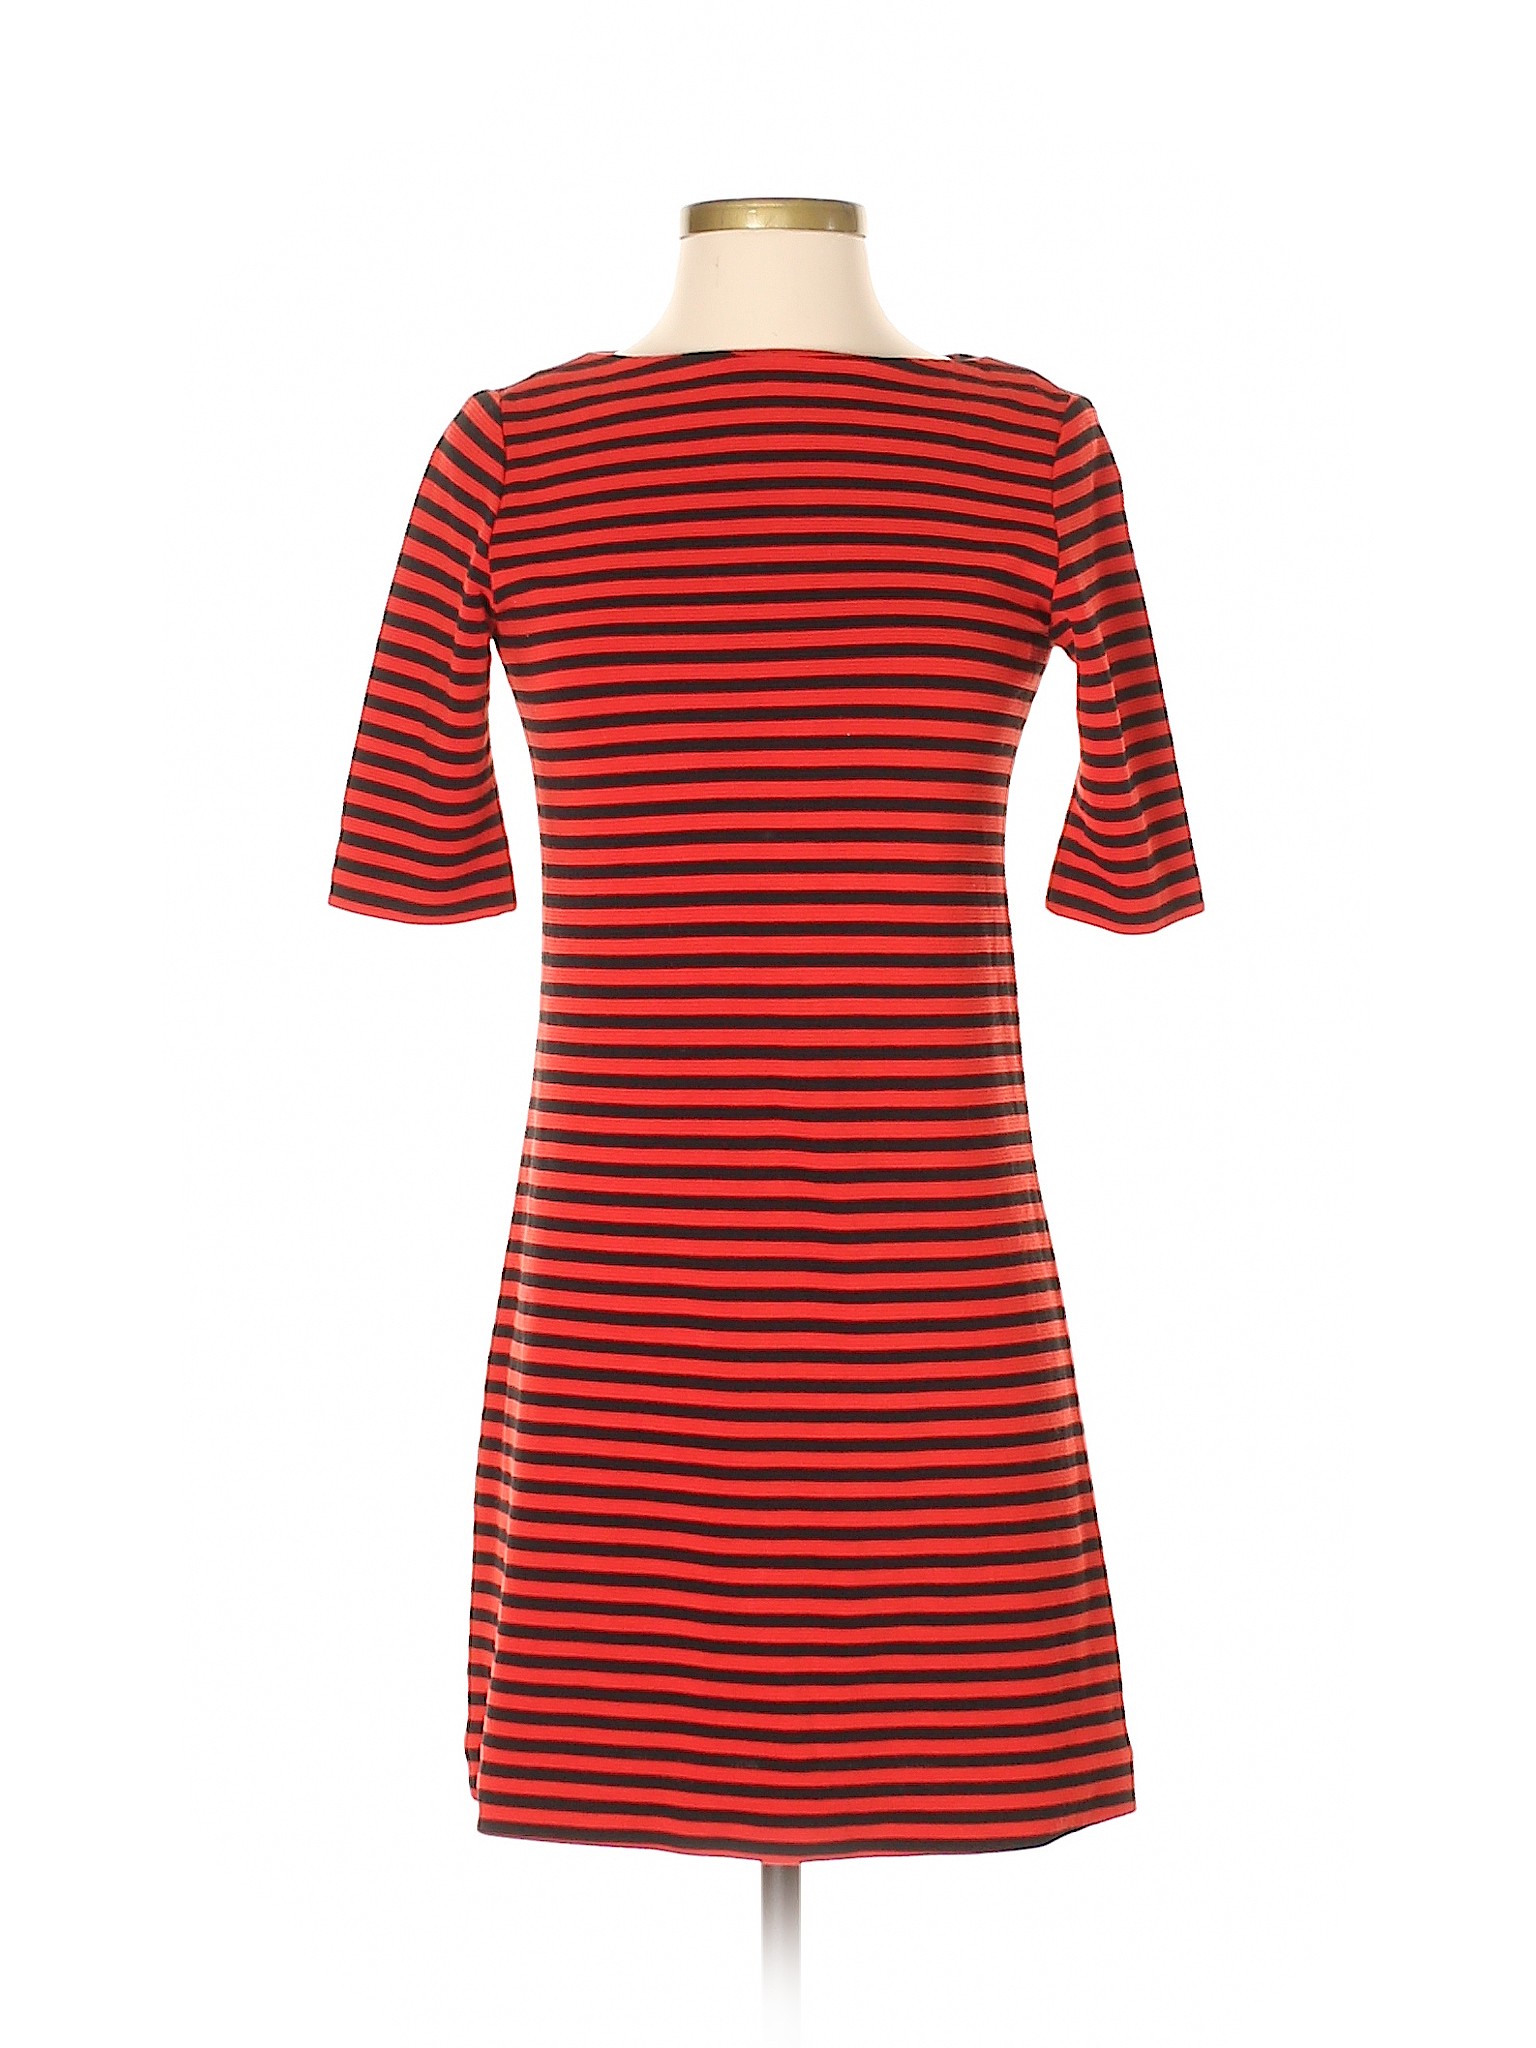 Uniqlo Women Red Casual Dress XS | eBay